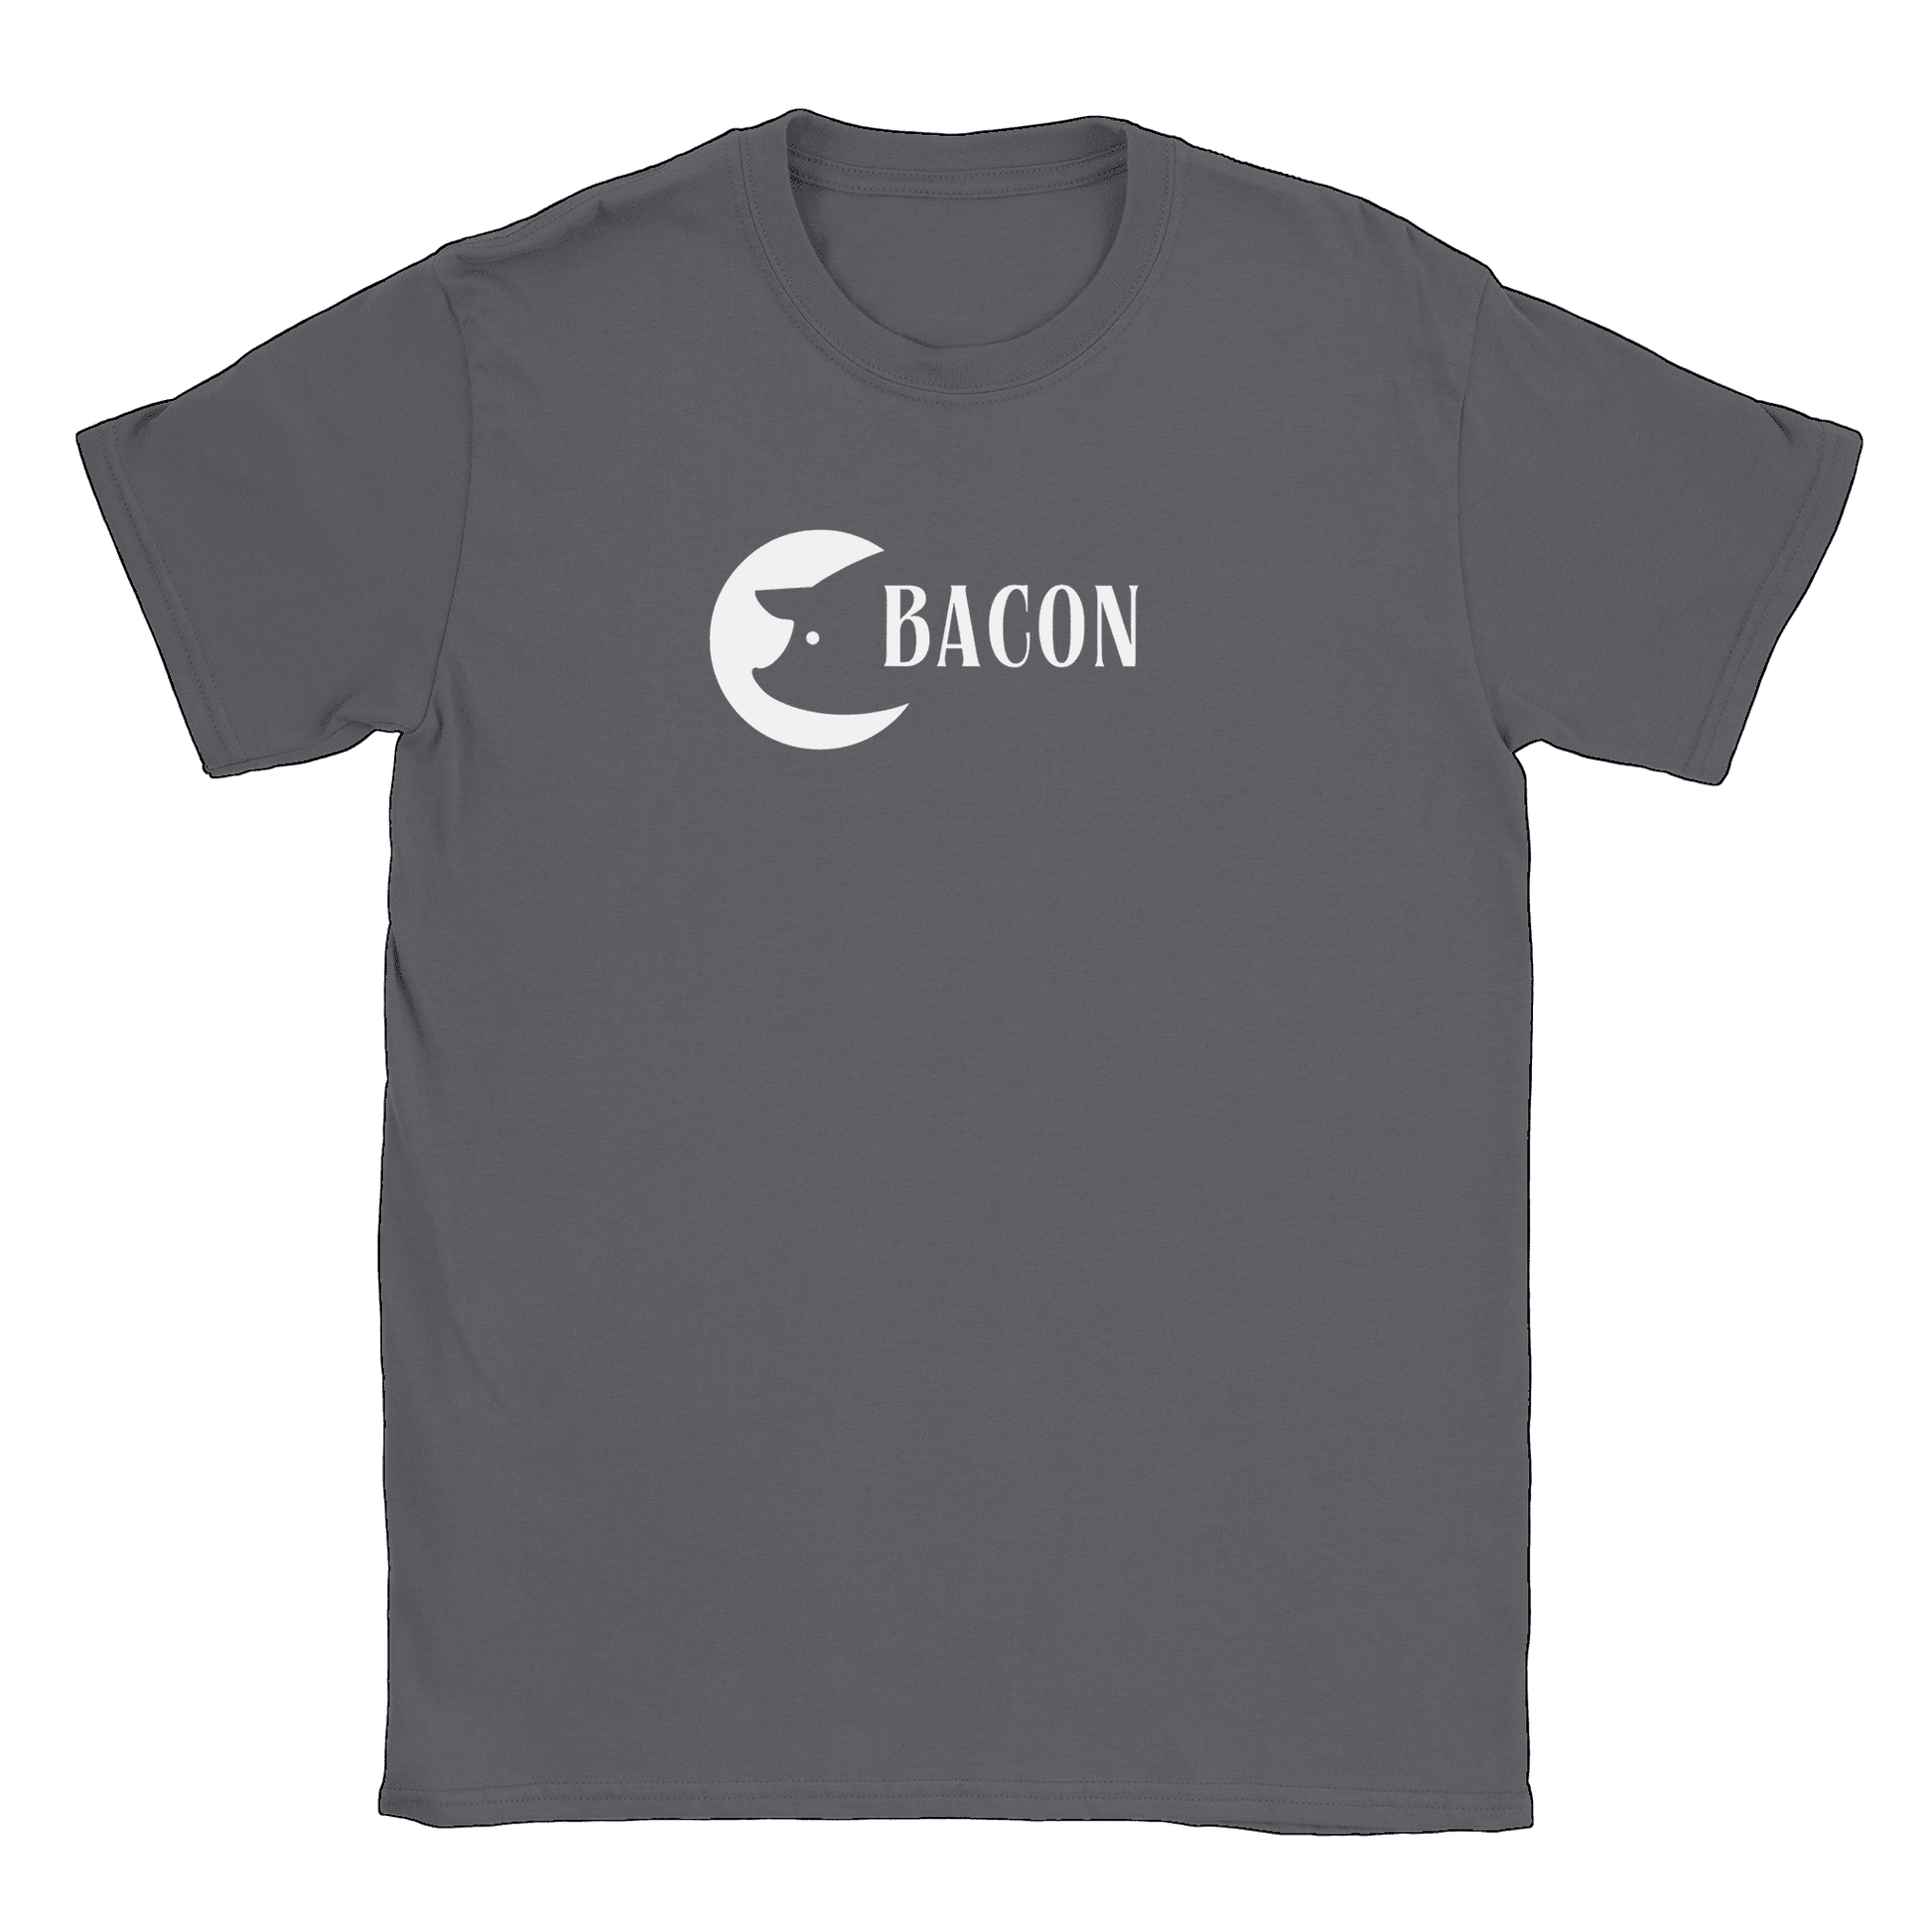 Bacon - T-shirt Charcoal